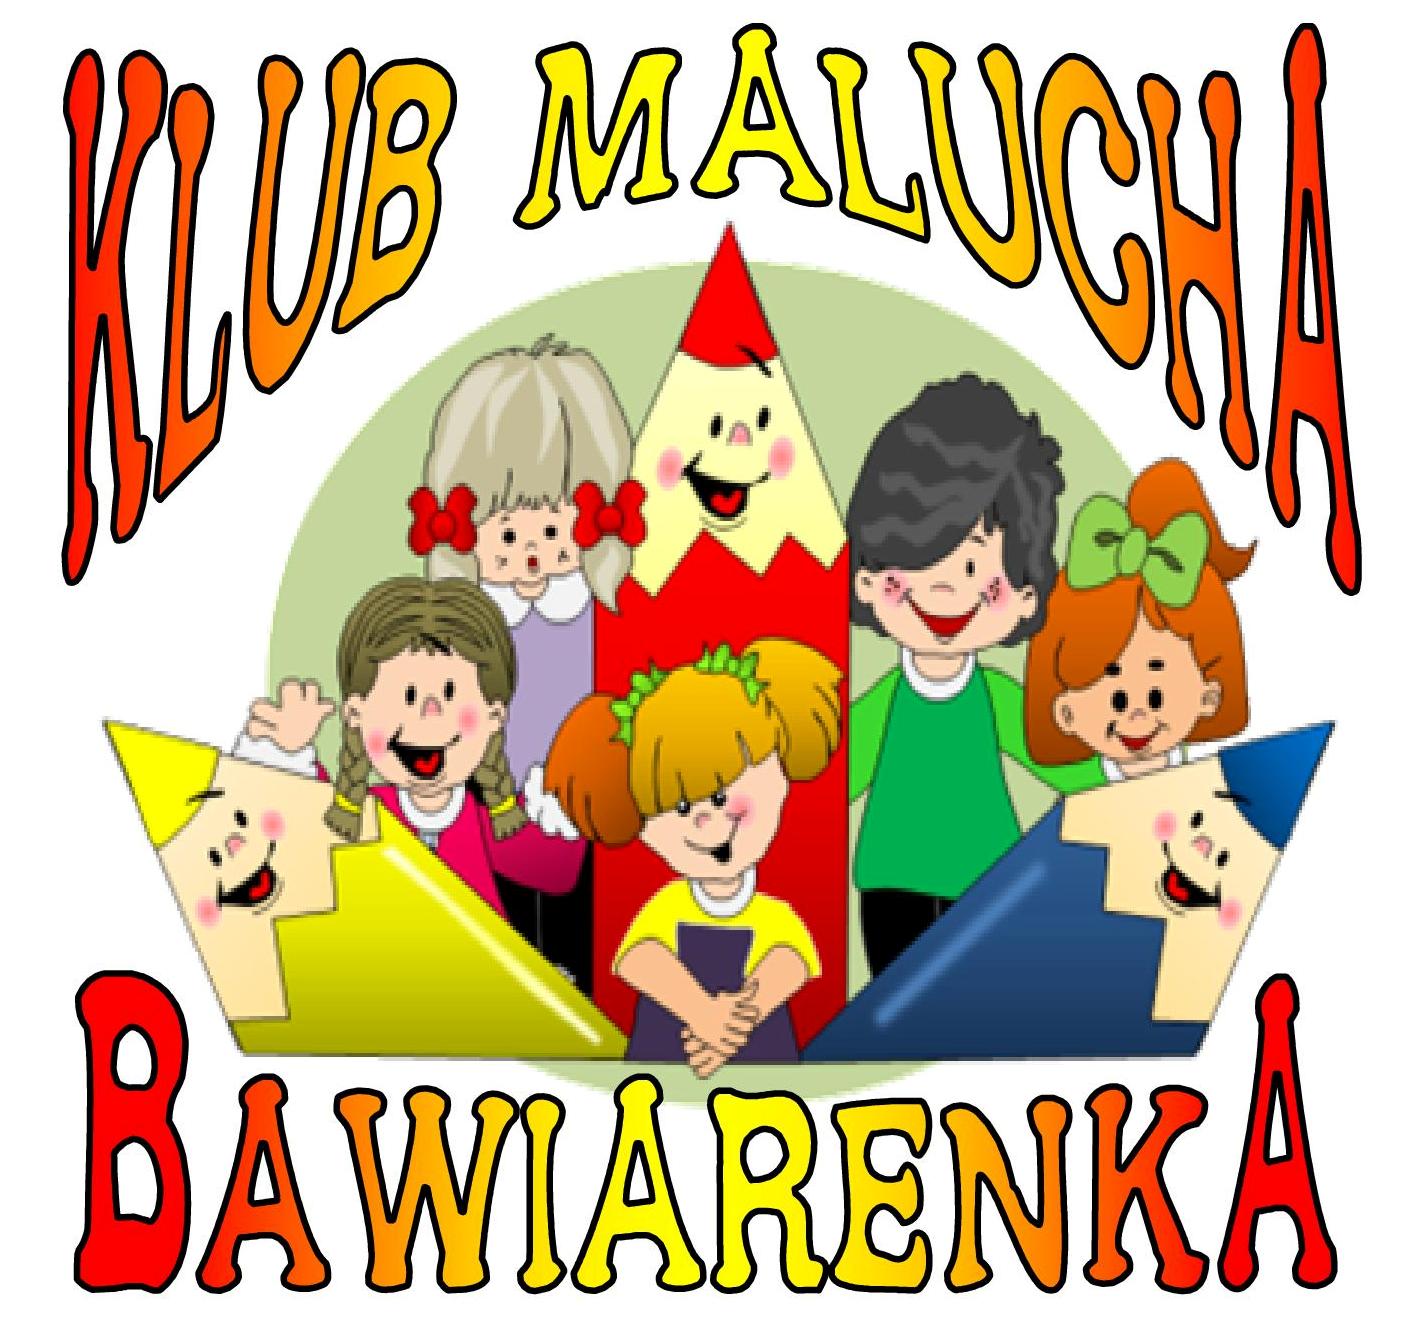 Bawiarenka logo